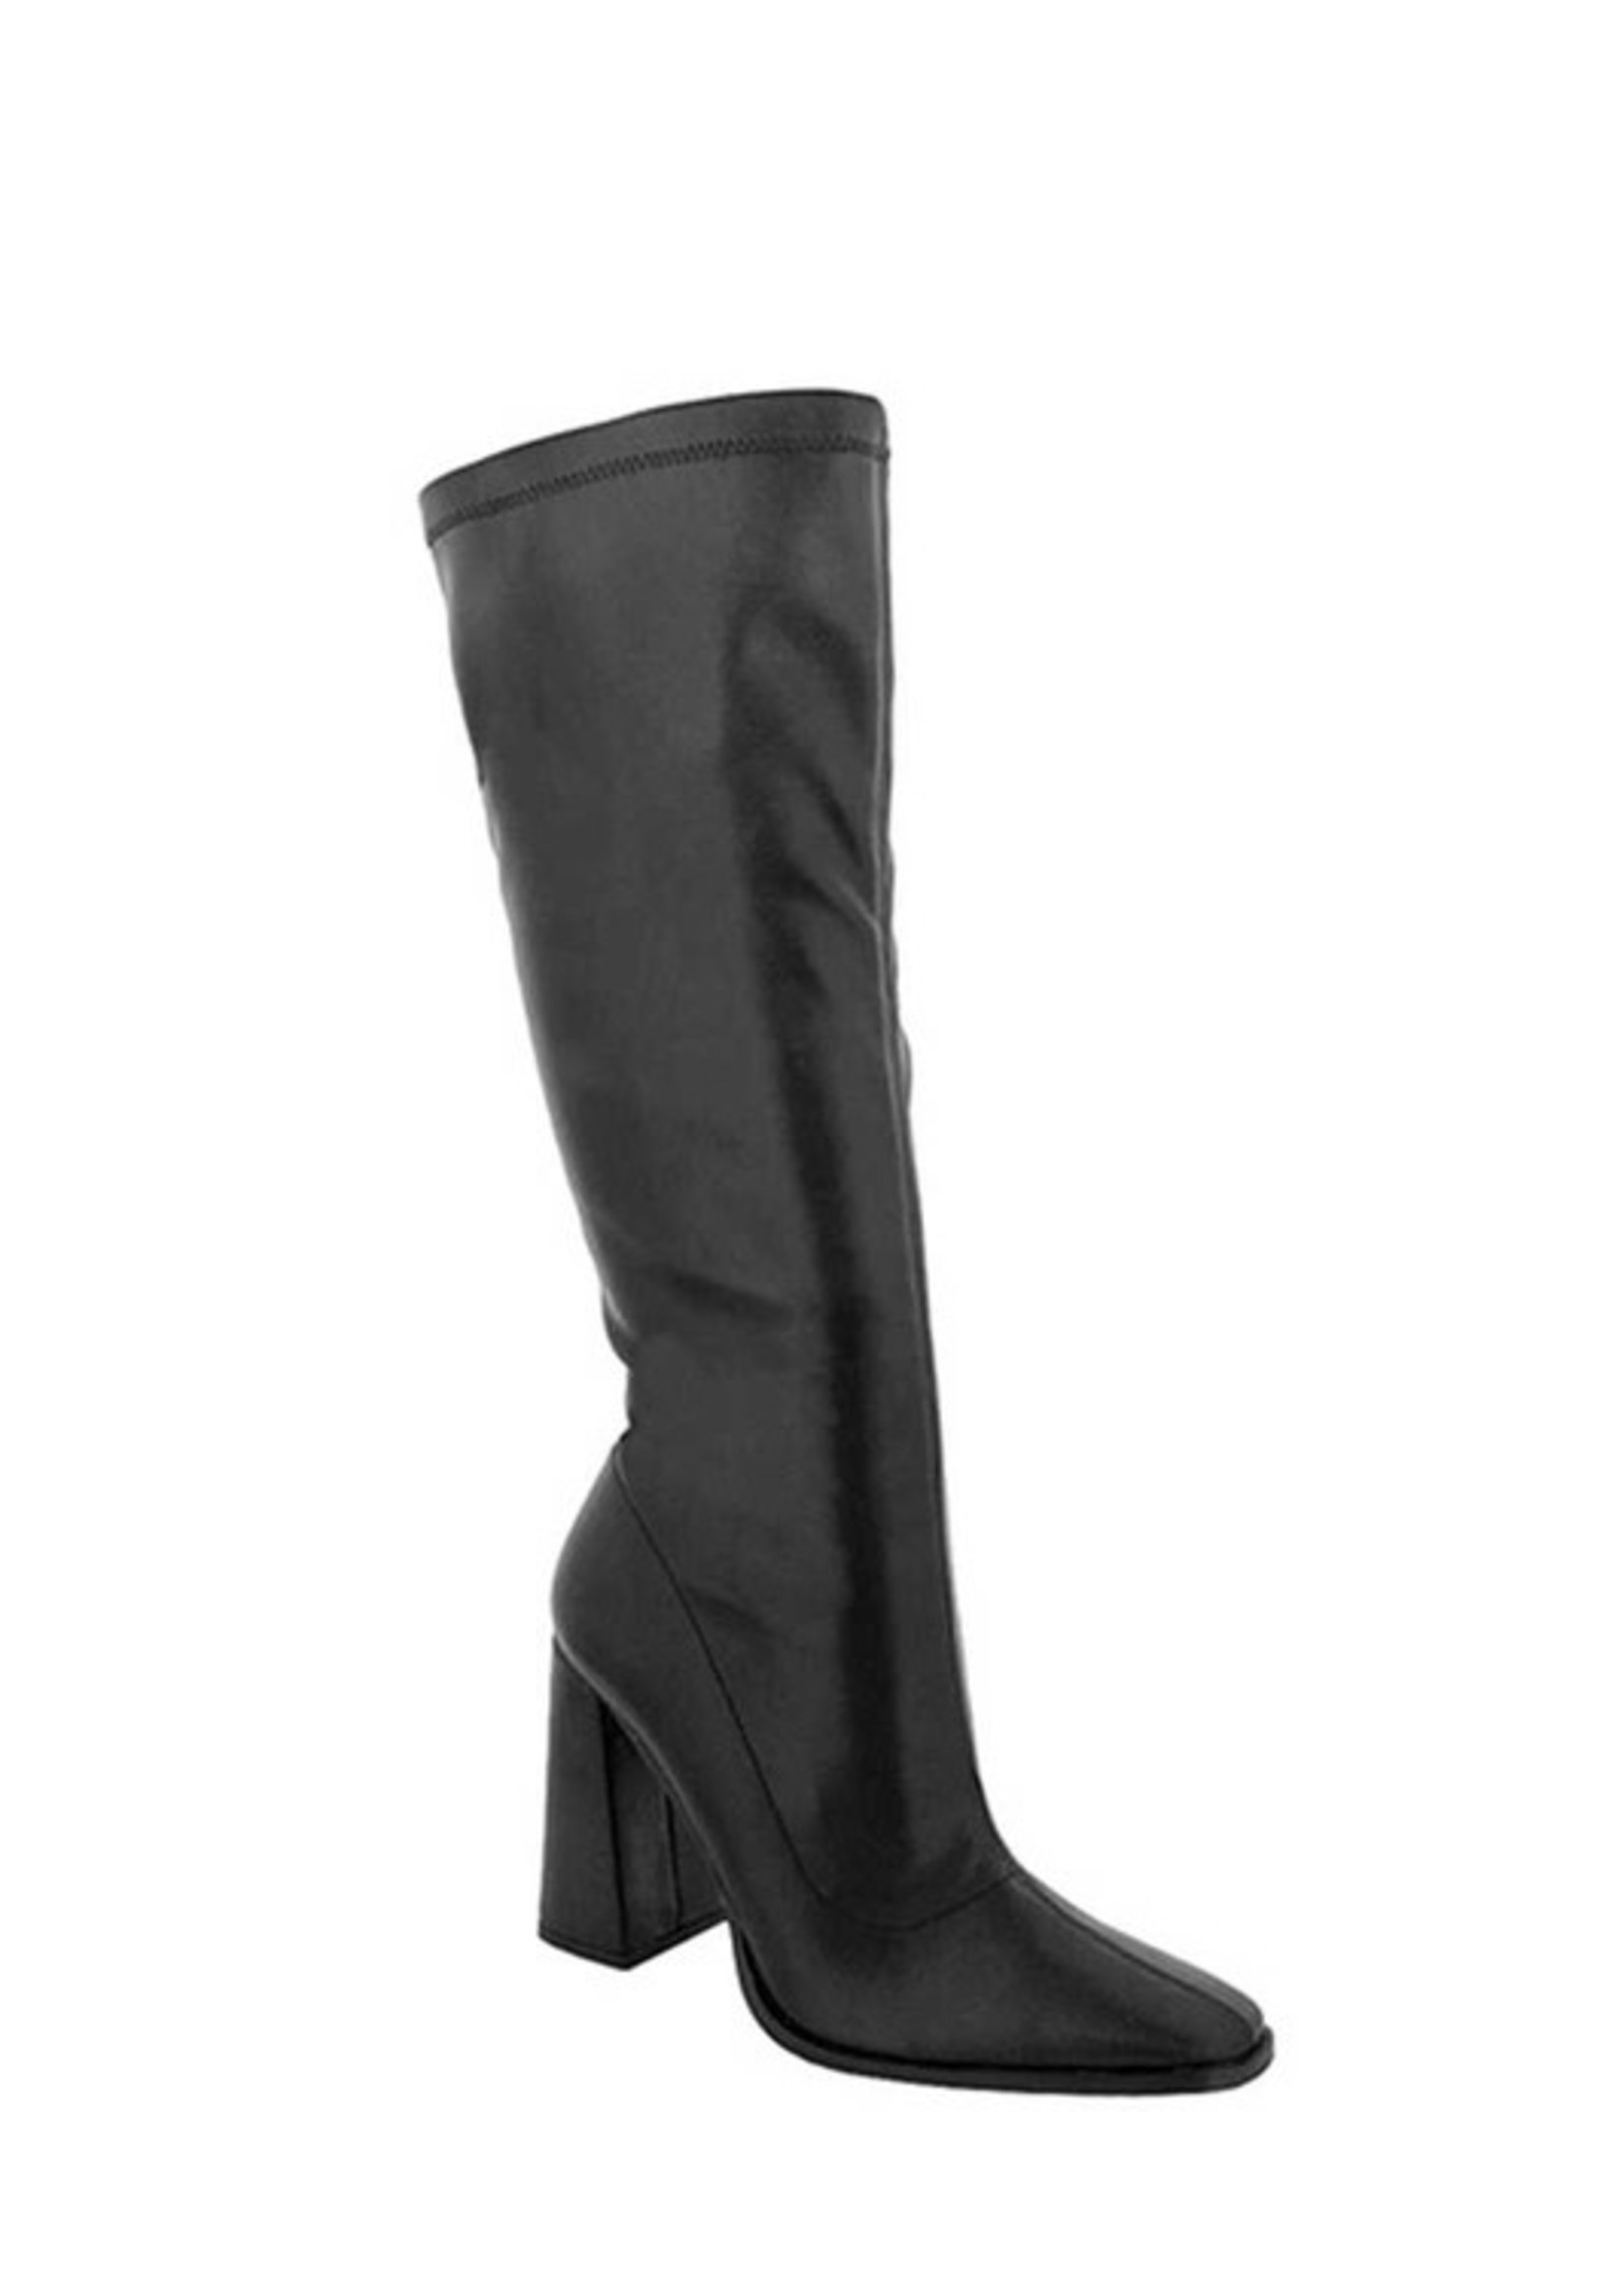 Tall heeled boot